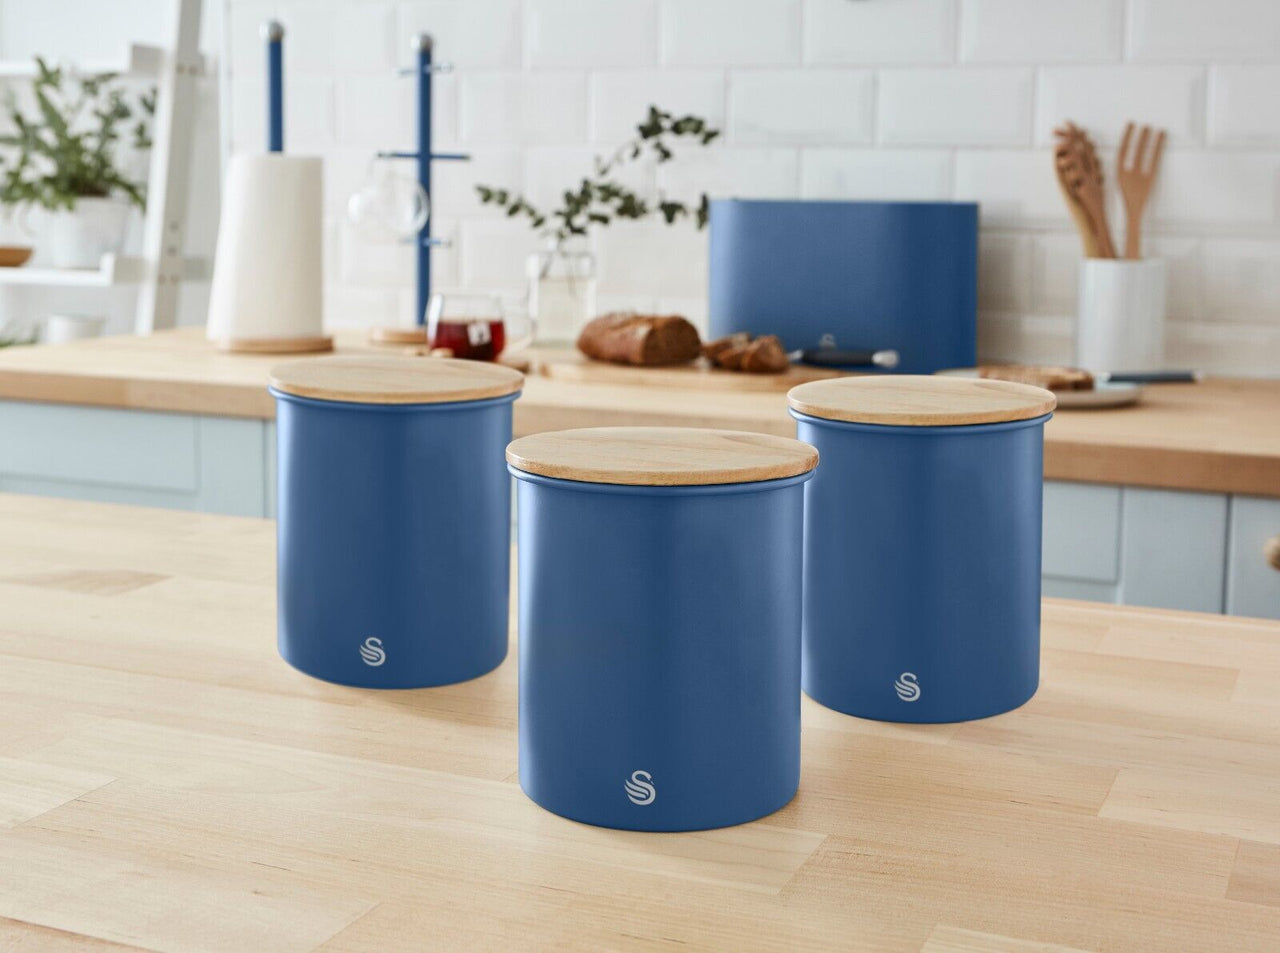 Swan Nordic Blue Tea Coffee & Sugar Canisters, Mug Tree, Towel Pole Matching Kitchen Storage Set